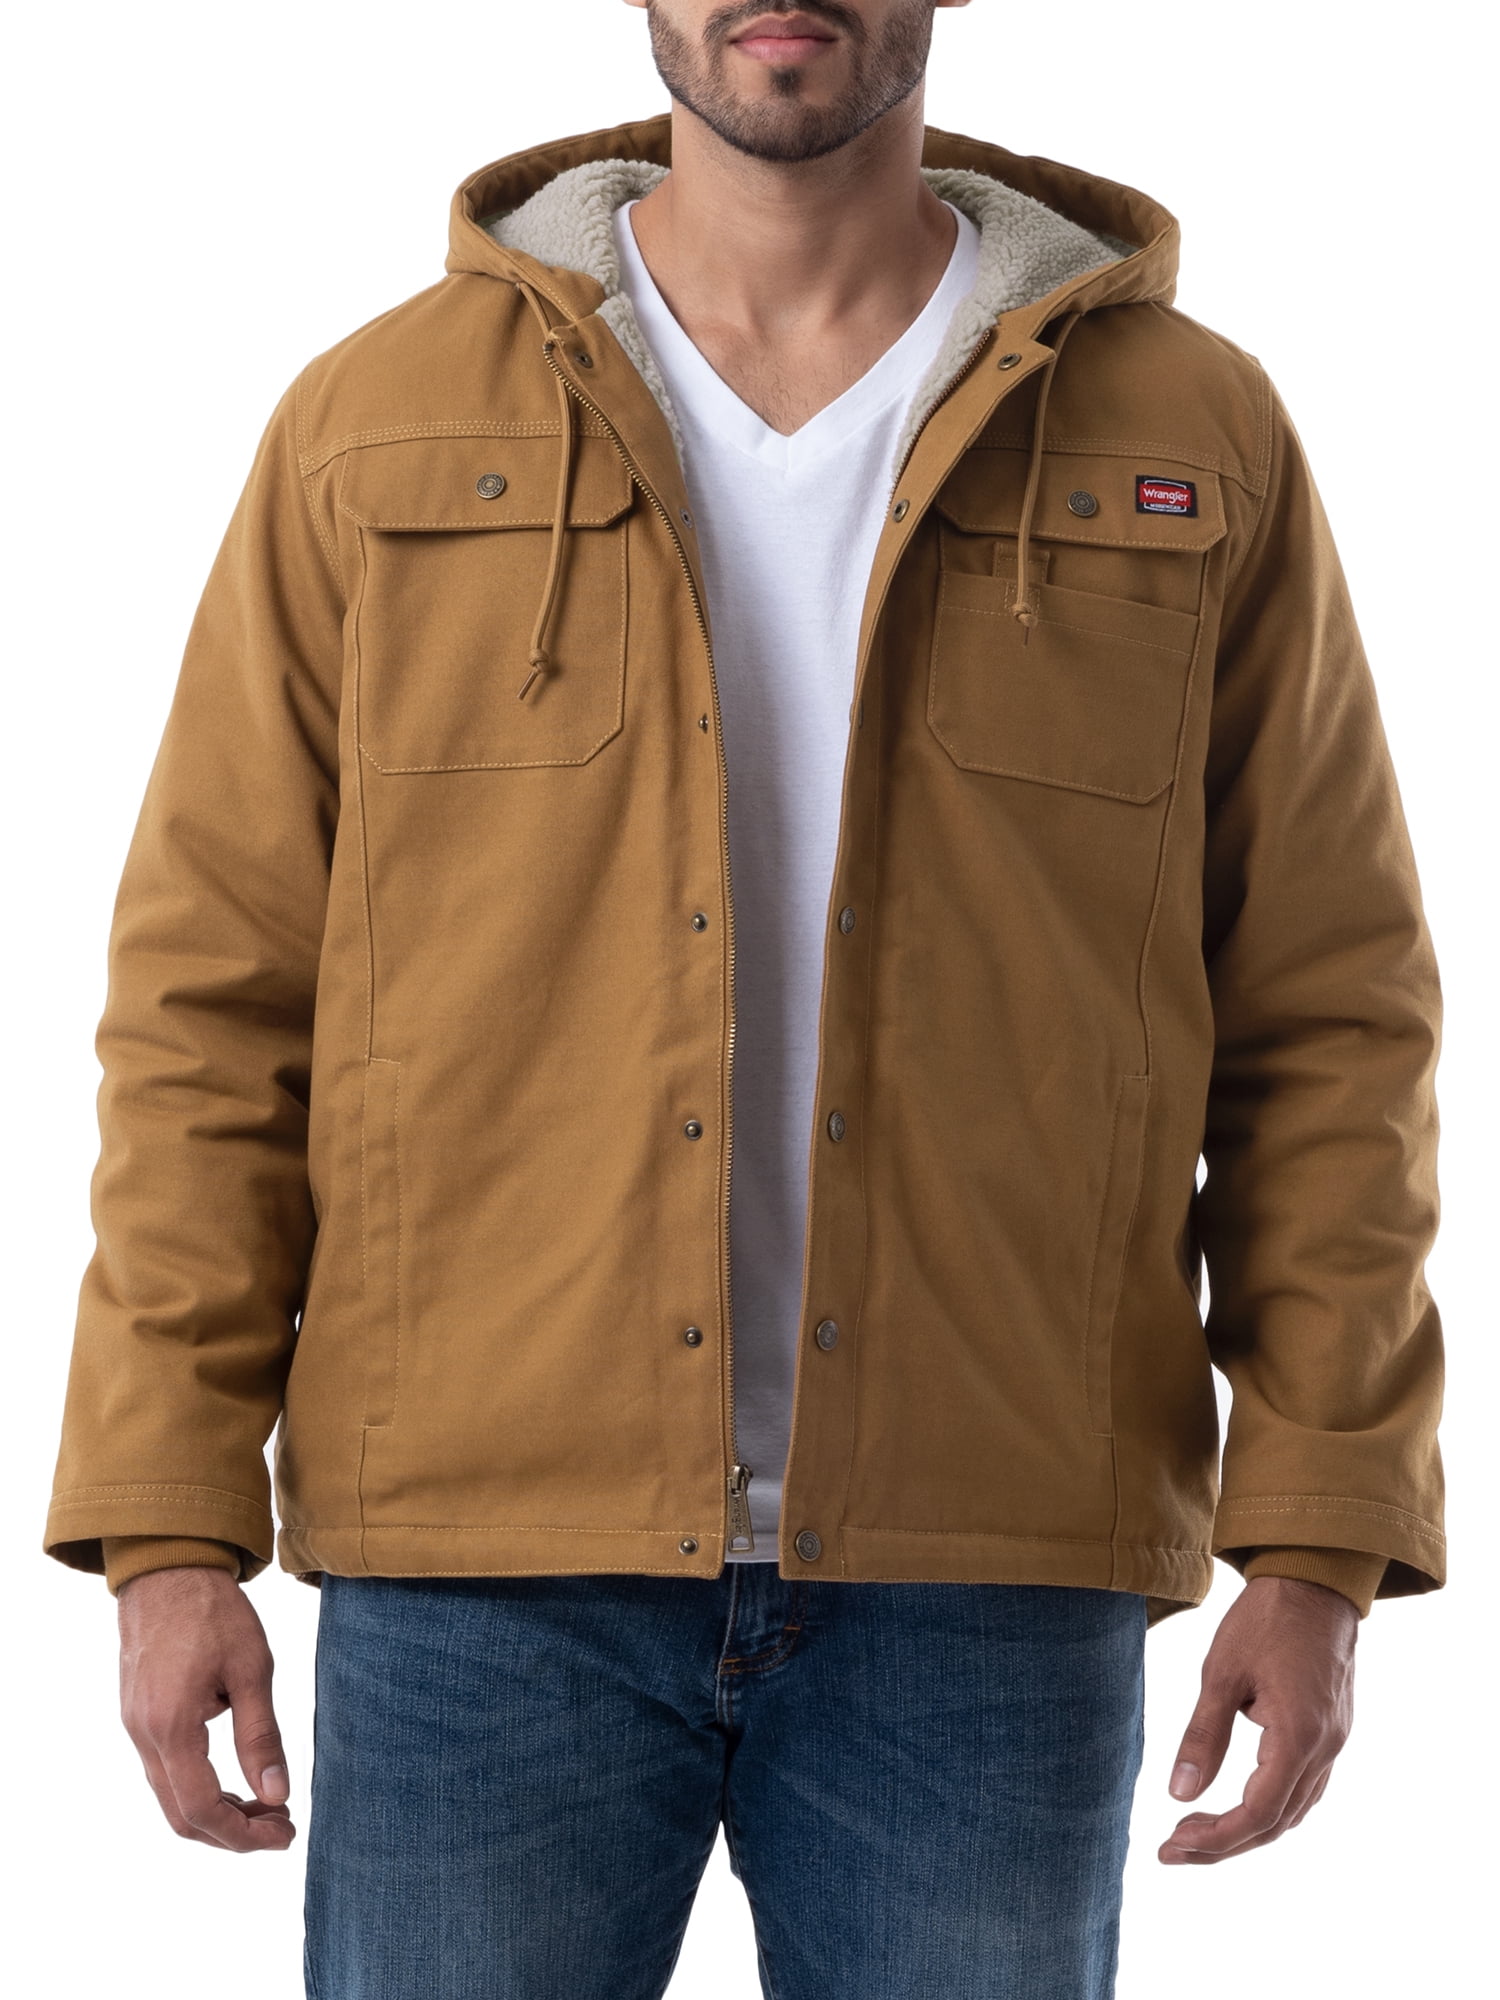 Wrangler Workwear Men's & Big Men's Sherpa Lined Duck Jacket, Sizes S-5XL -  